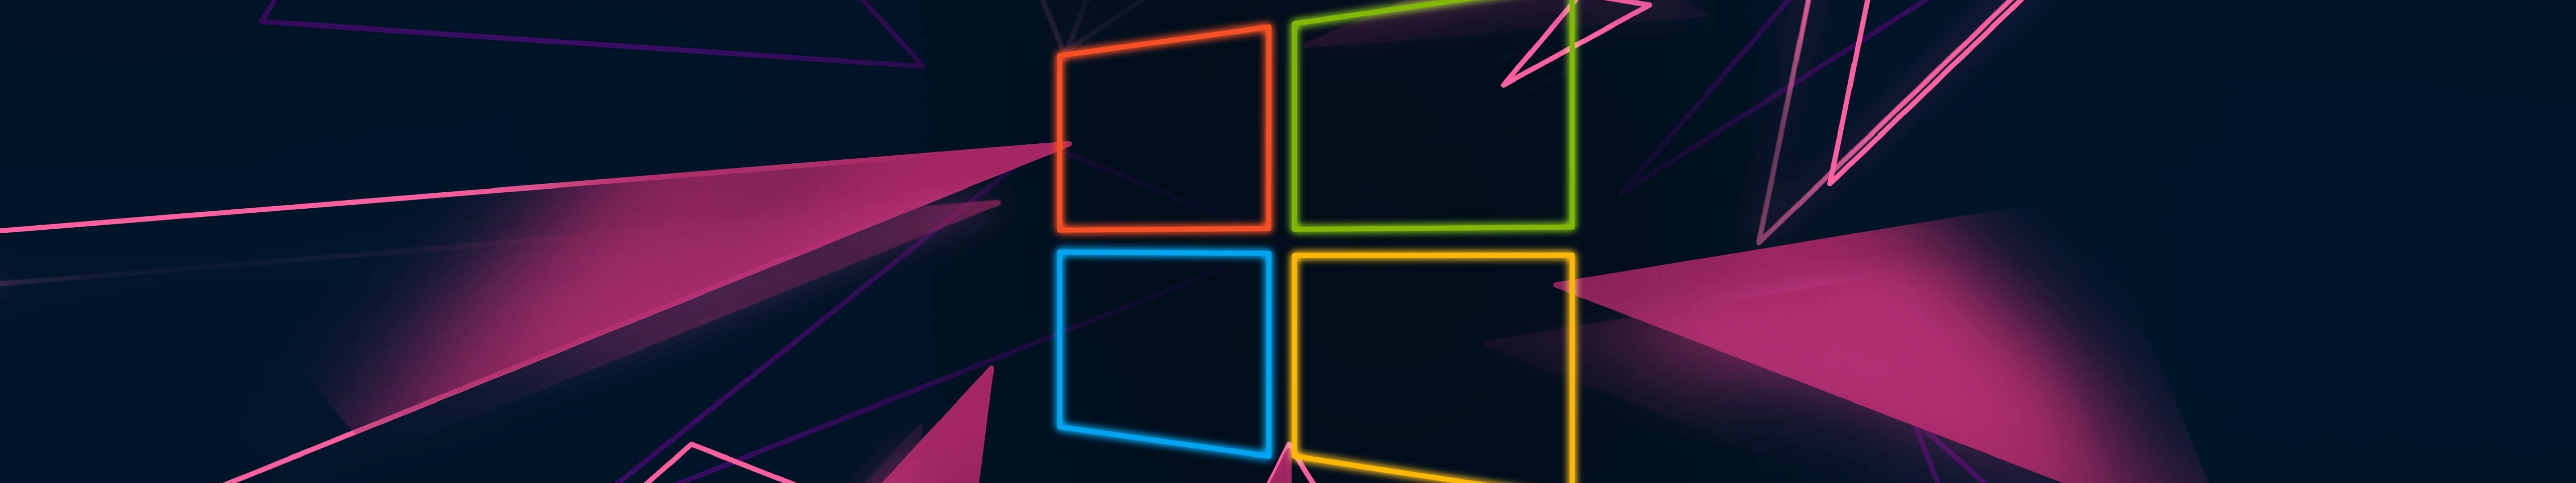 7680x1440 Windows 10 Neon Logo 7680x1440 Resolution Wallpaper, HD